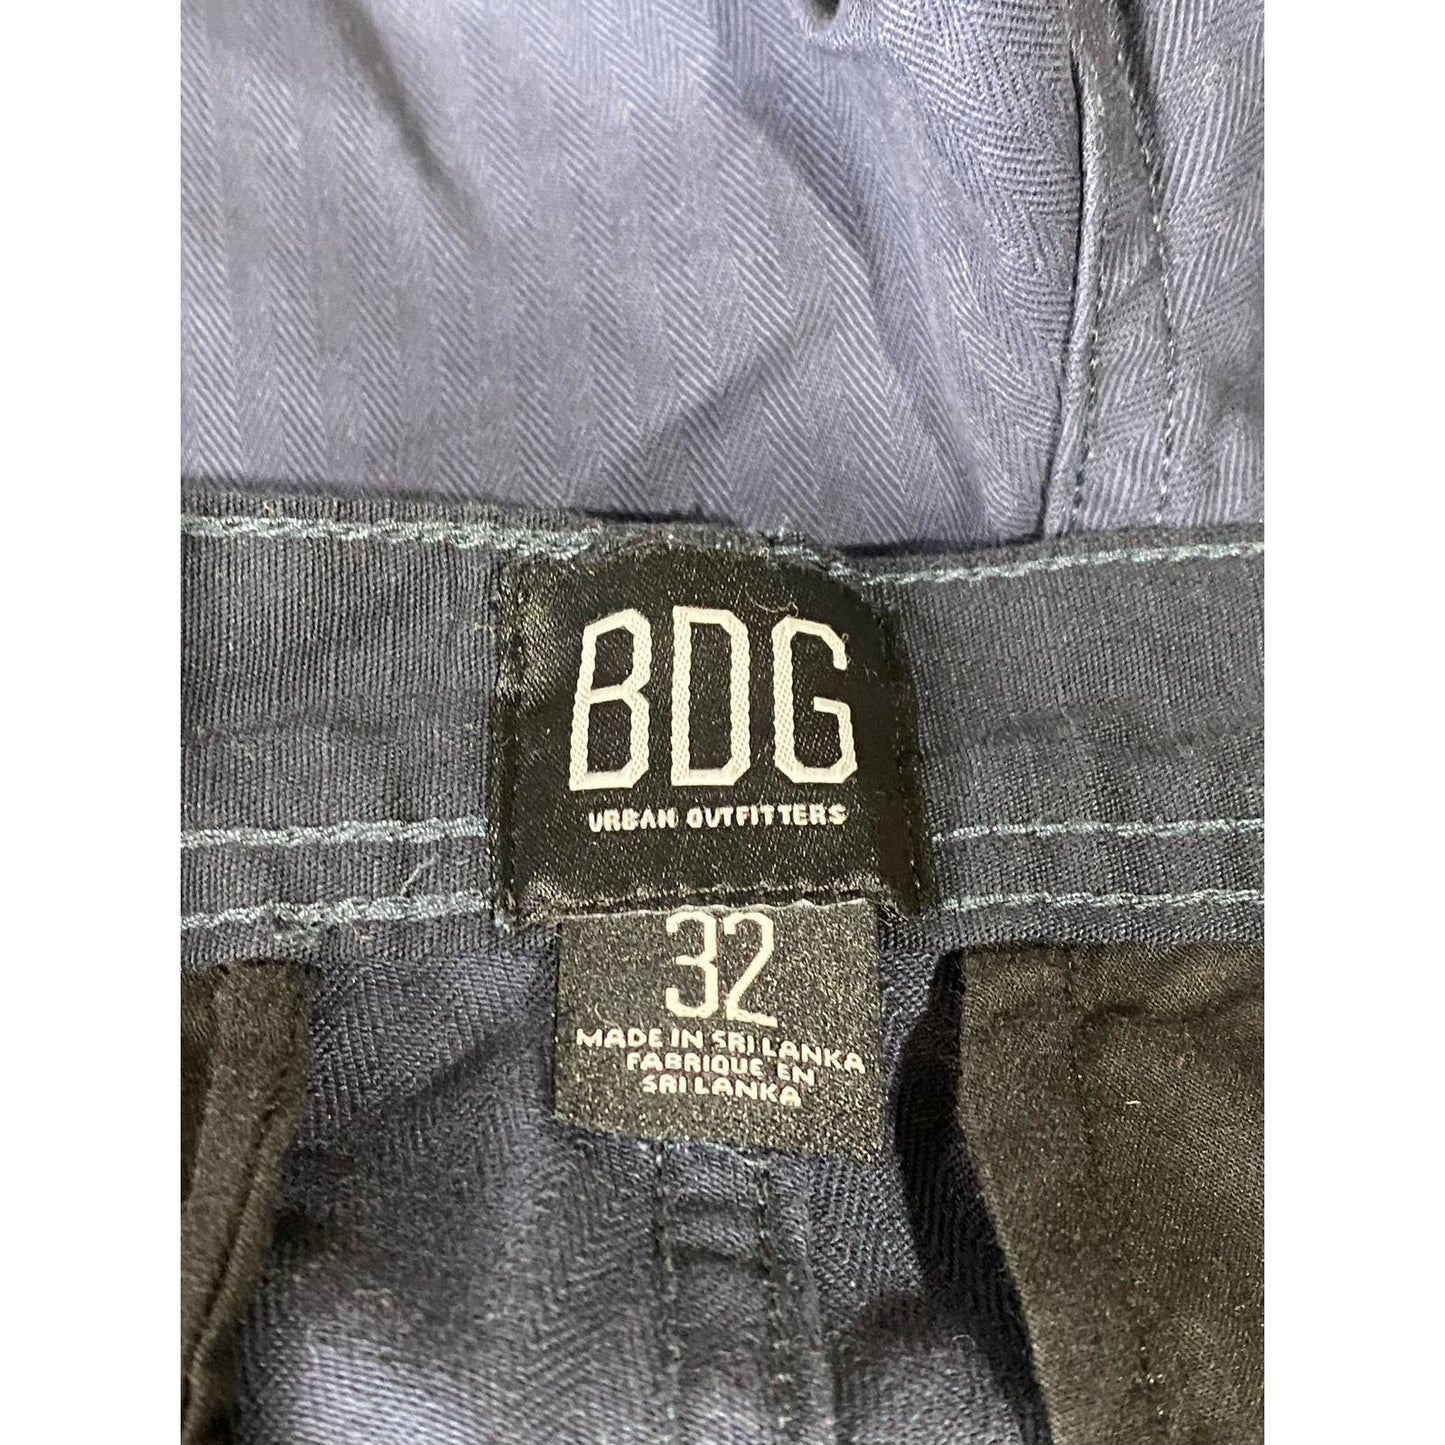 BDG URBAN OUTFIITTERS Men's Navy Zipper-Cargo Pocket Shorts SZ 32